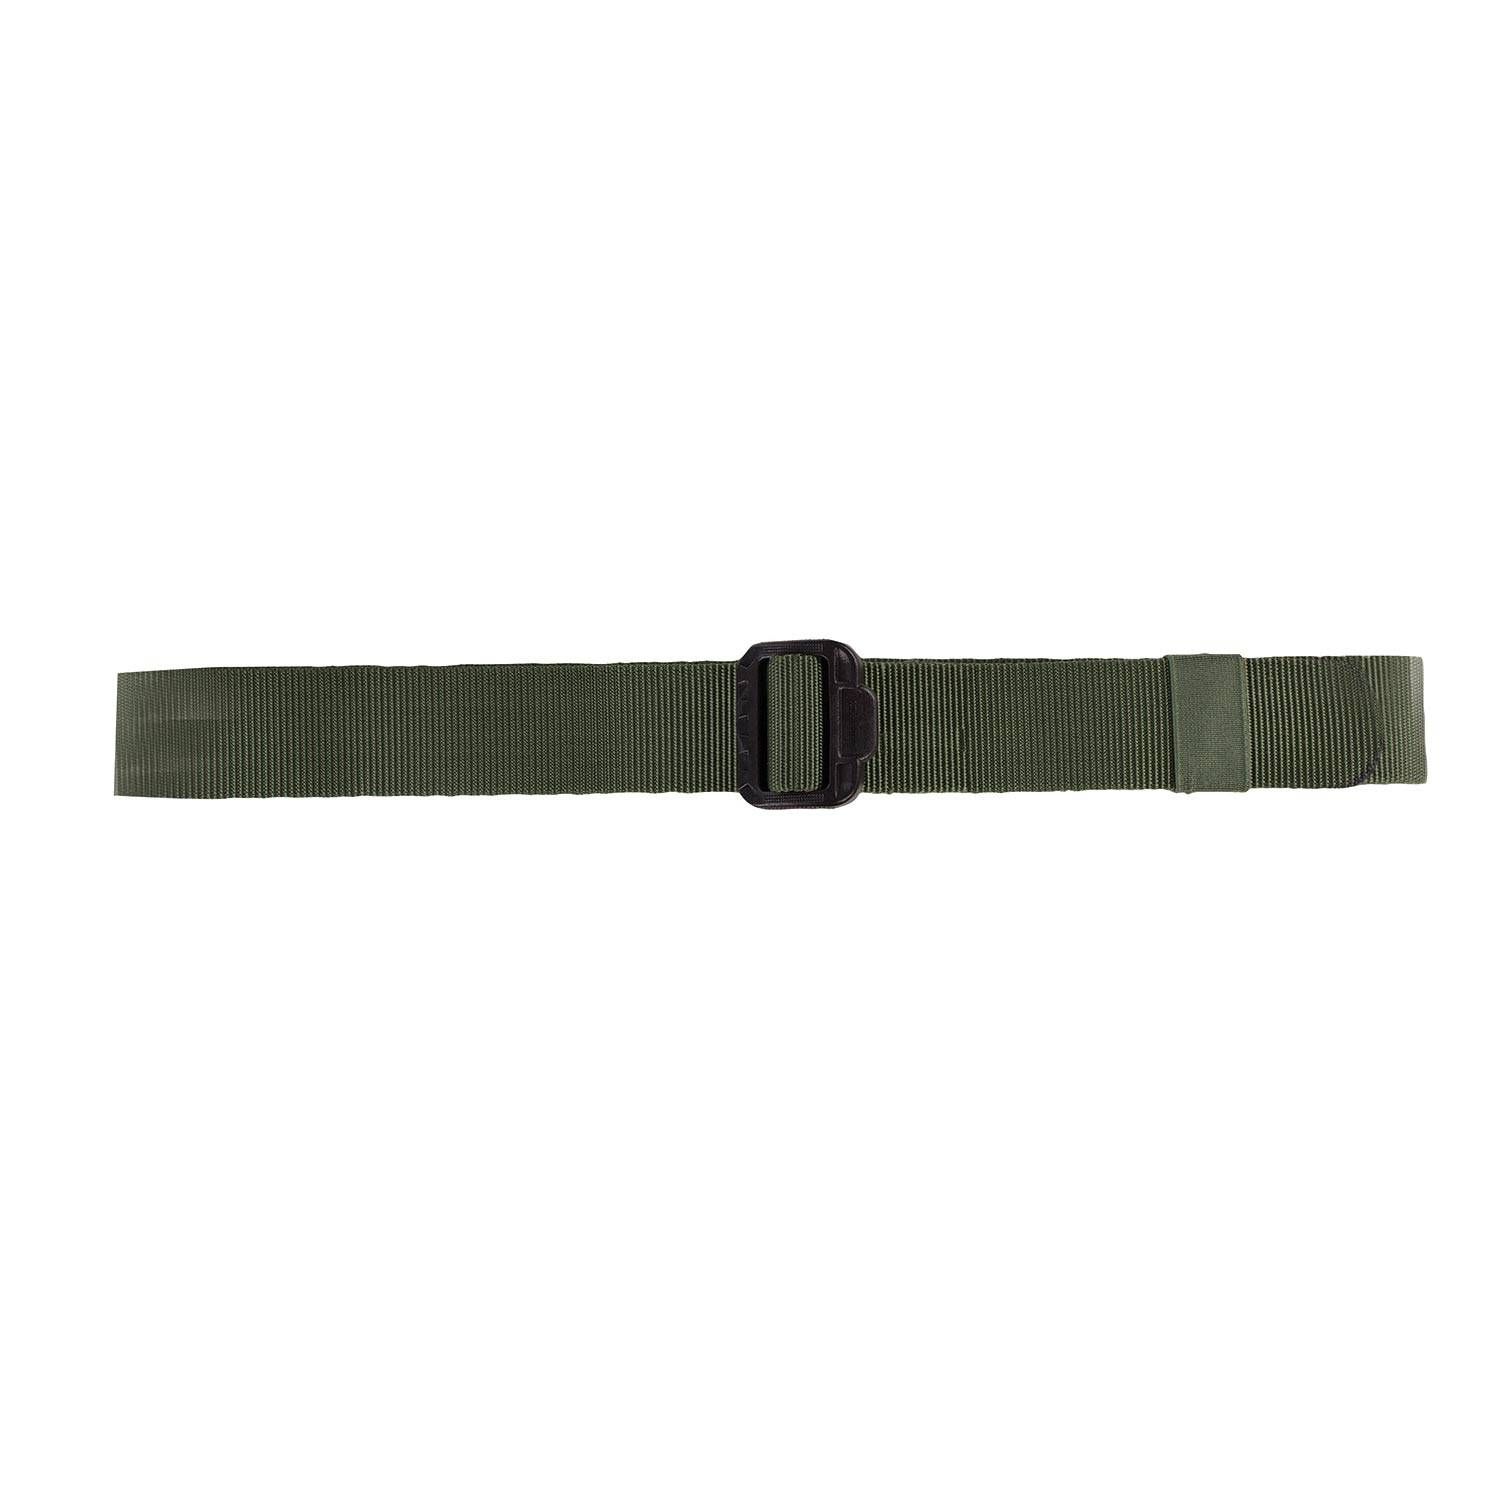 XLarge Tru Spec 4164006 Men's Black Security Friendly Belt 